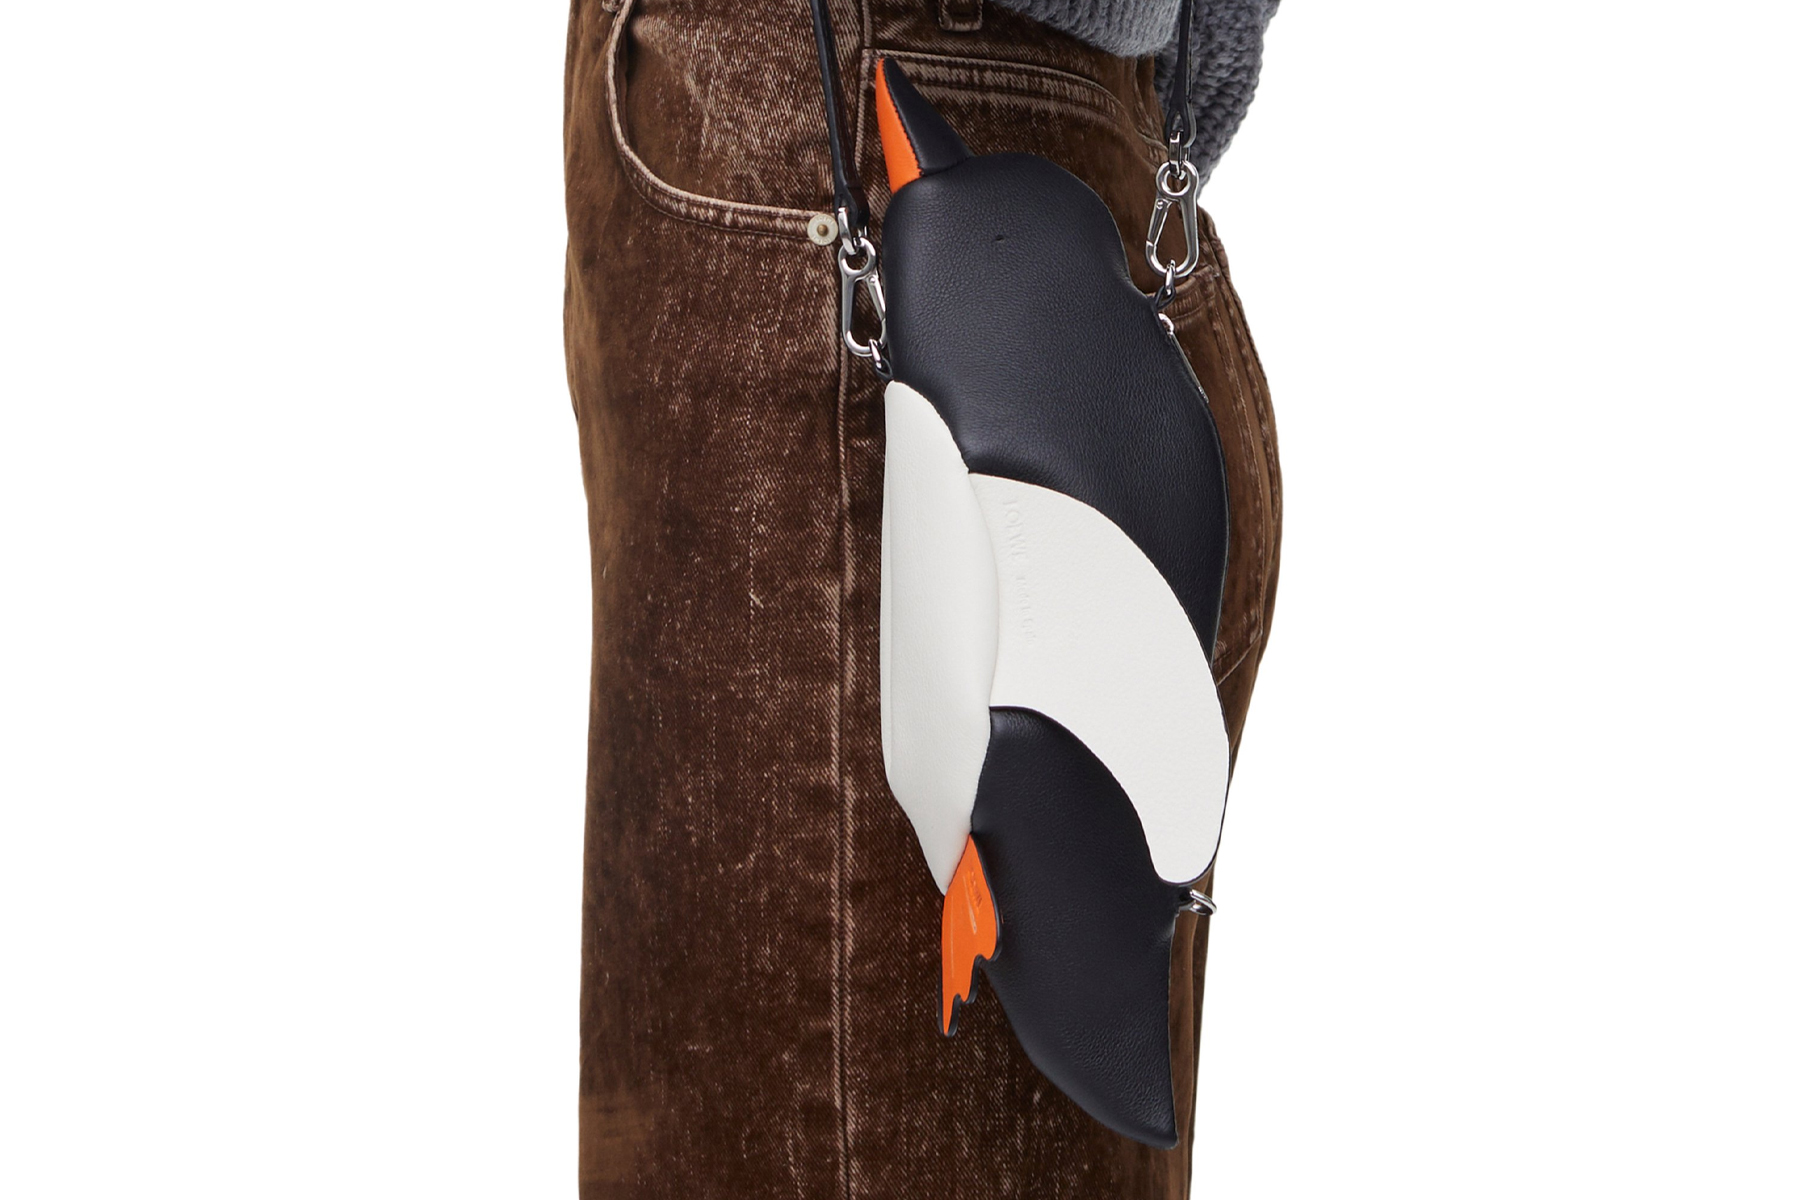 Loewe borsa penguin pelle di vitello pinguino